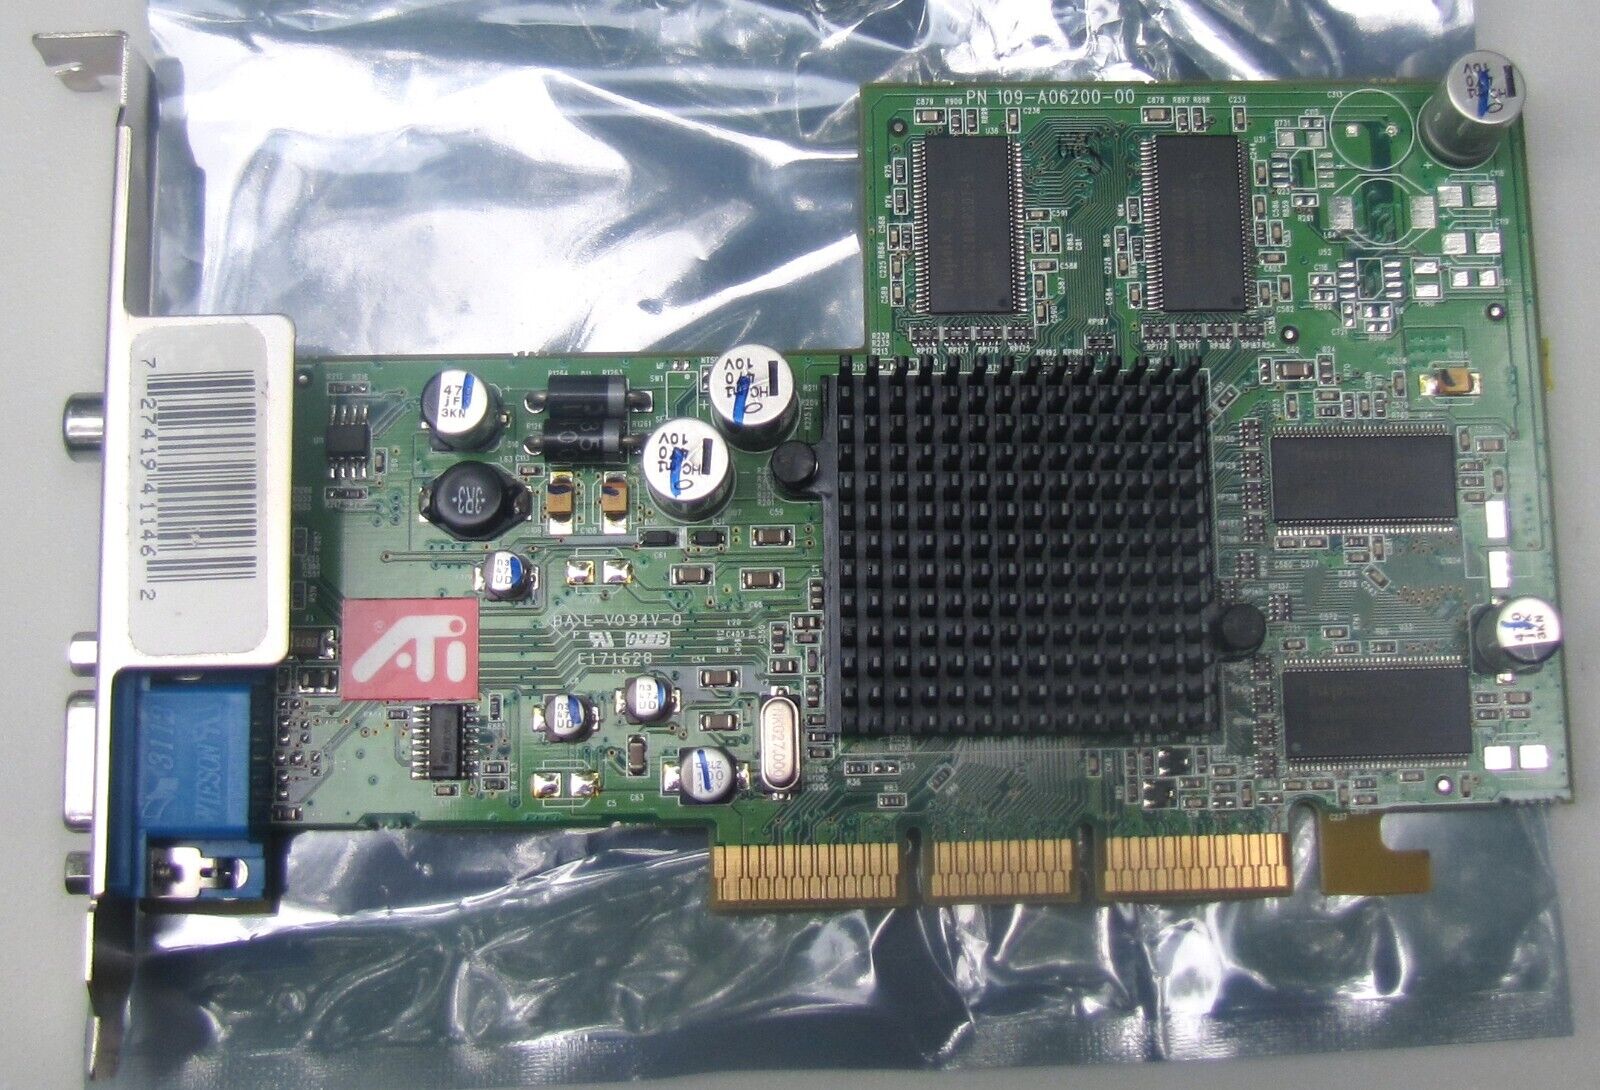 AMD ATI Radeon 9200 128MB Desktop AGP Video Graphics Card PN 109-A06200-00